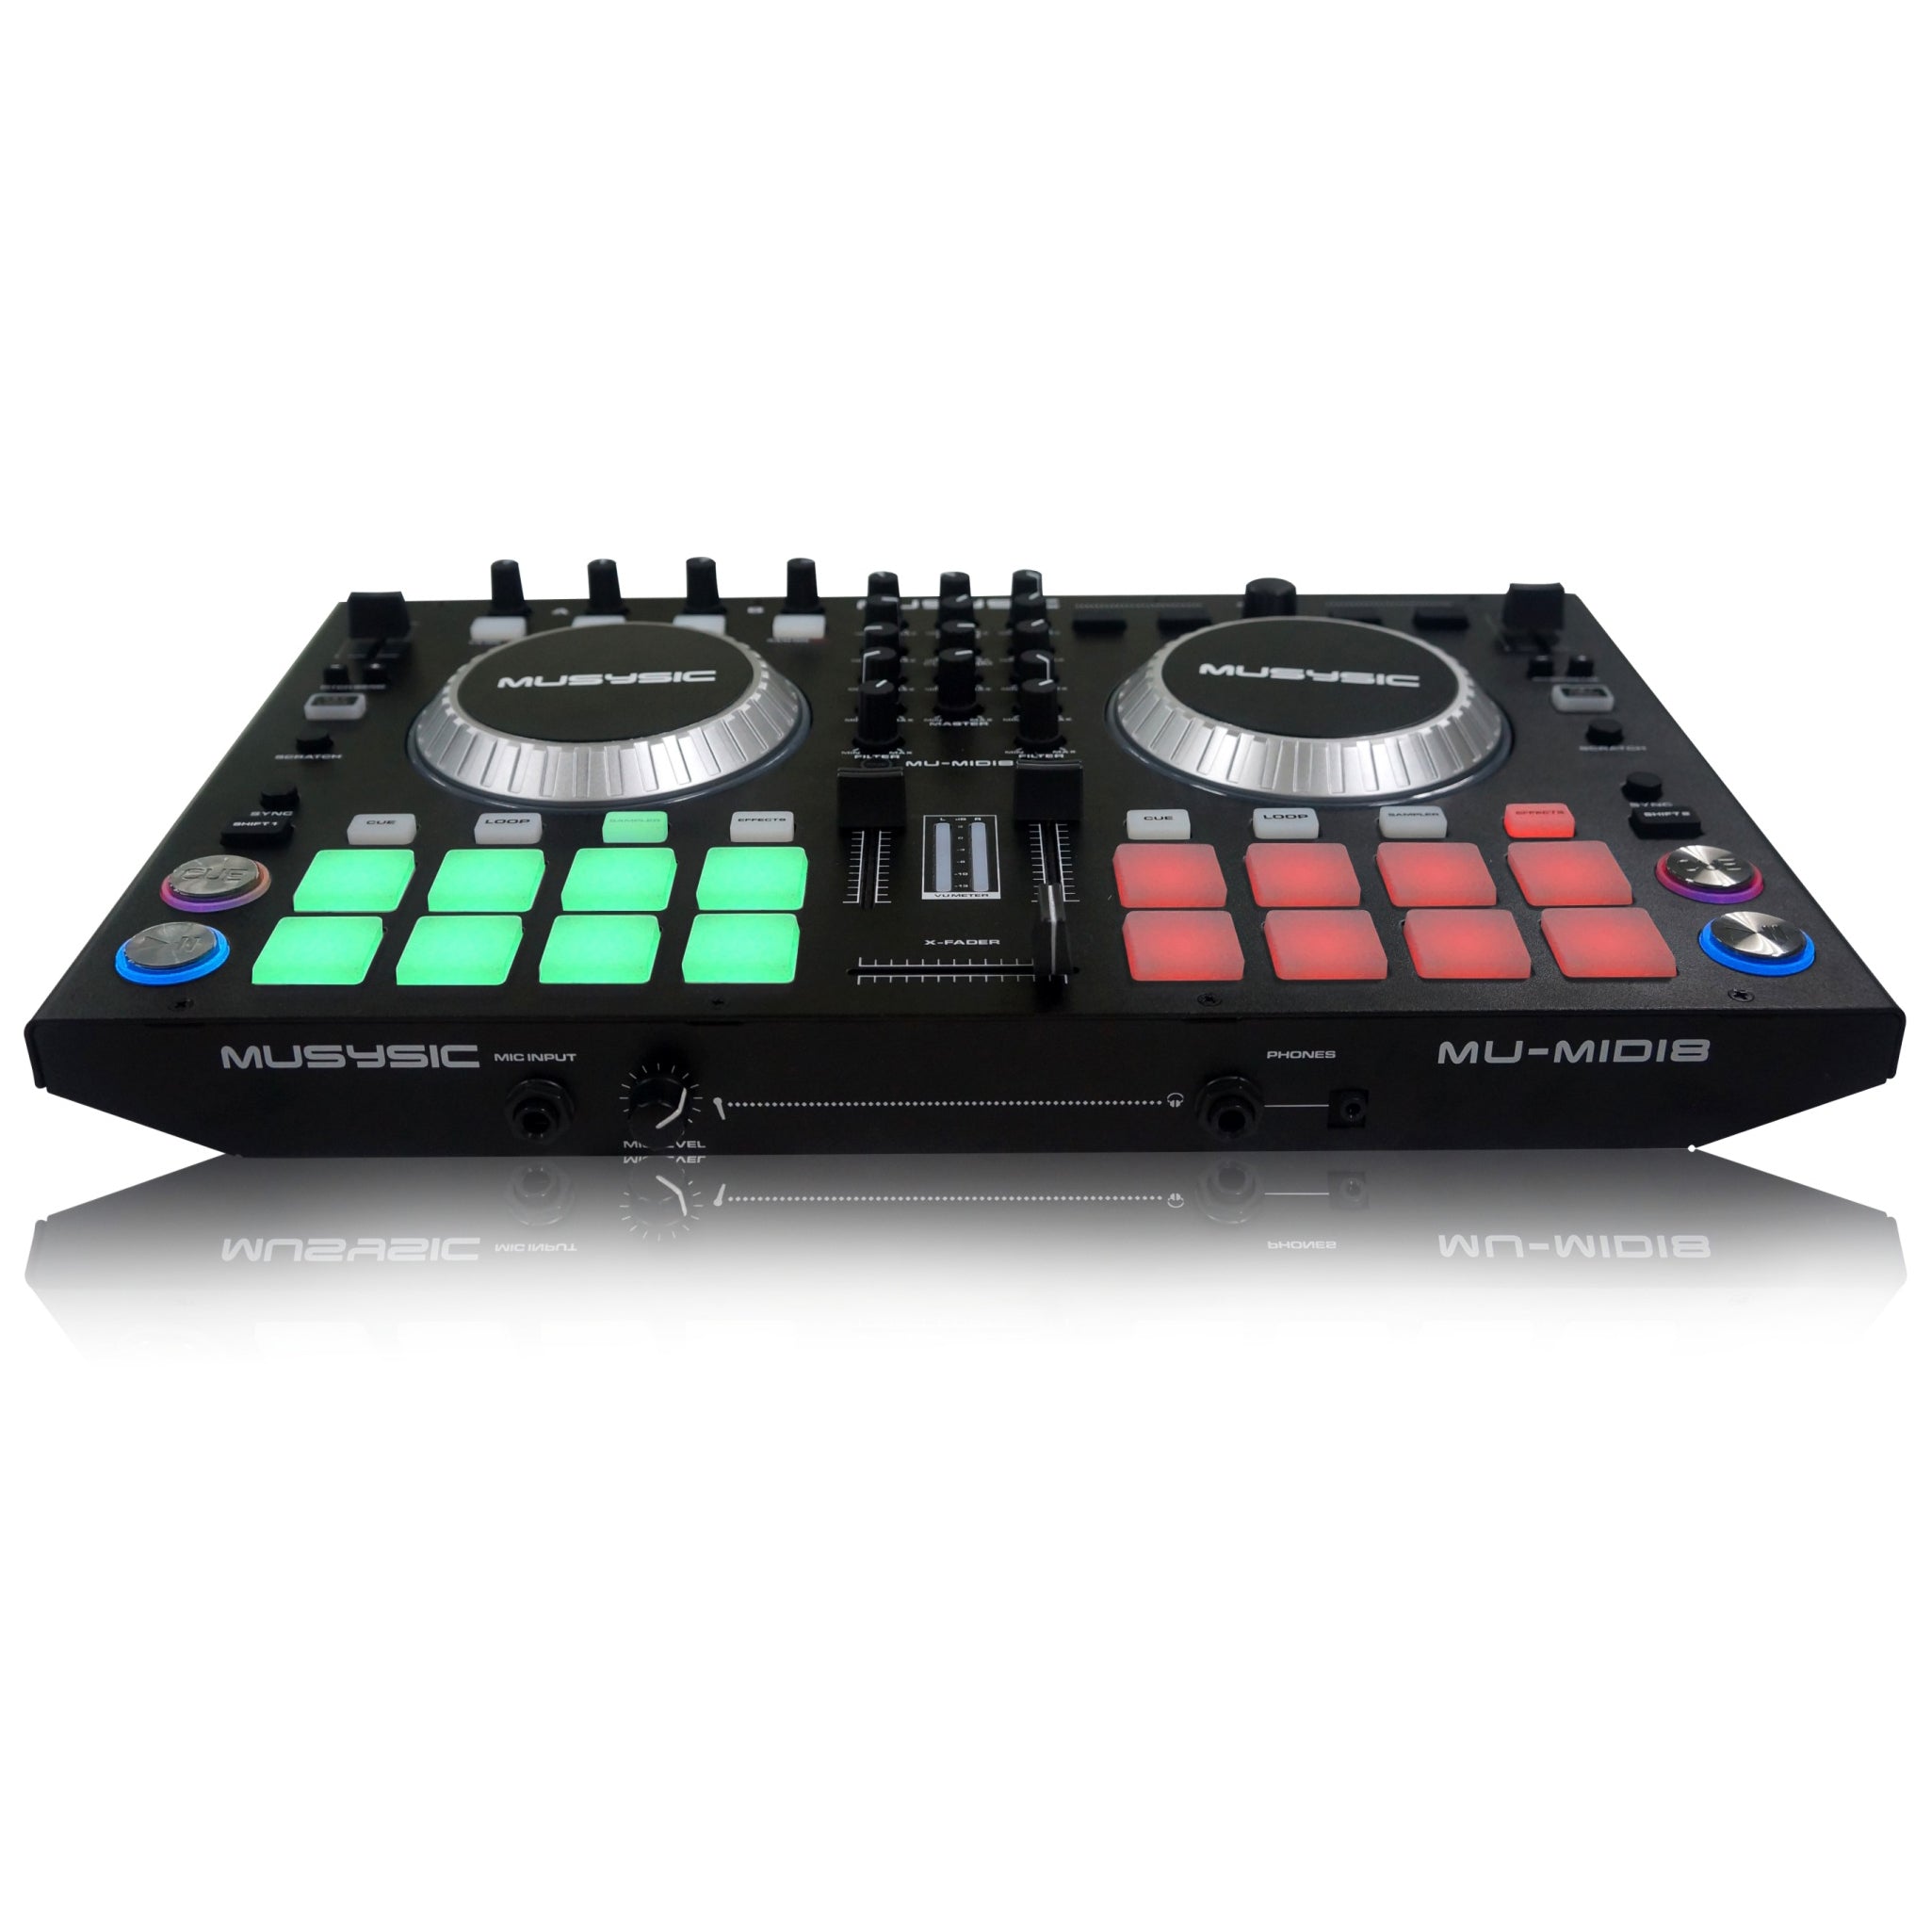 2-Channel USB MIDI best DJ Controller - MUSYSIC